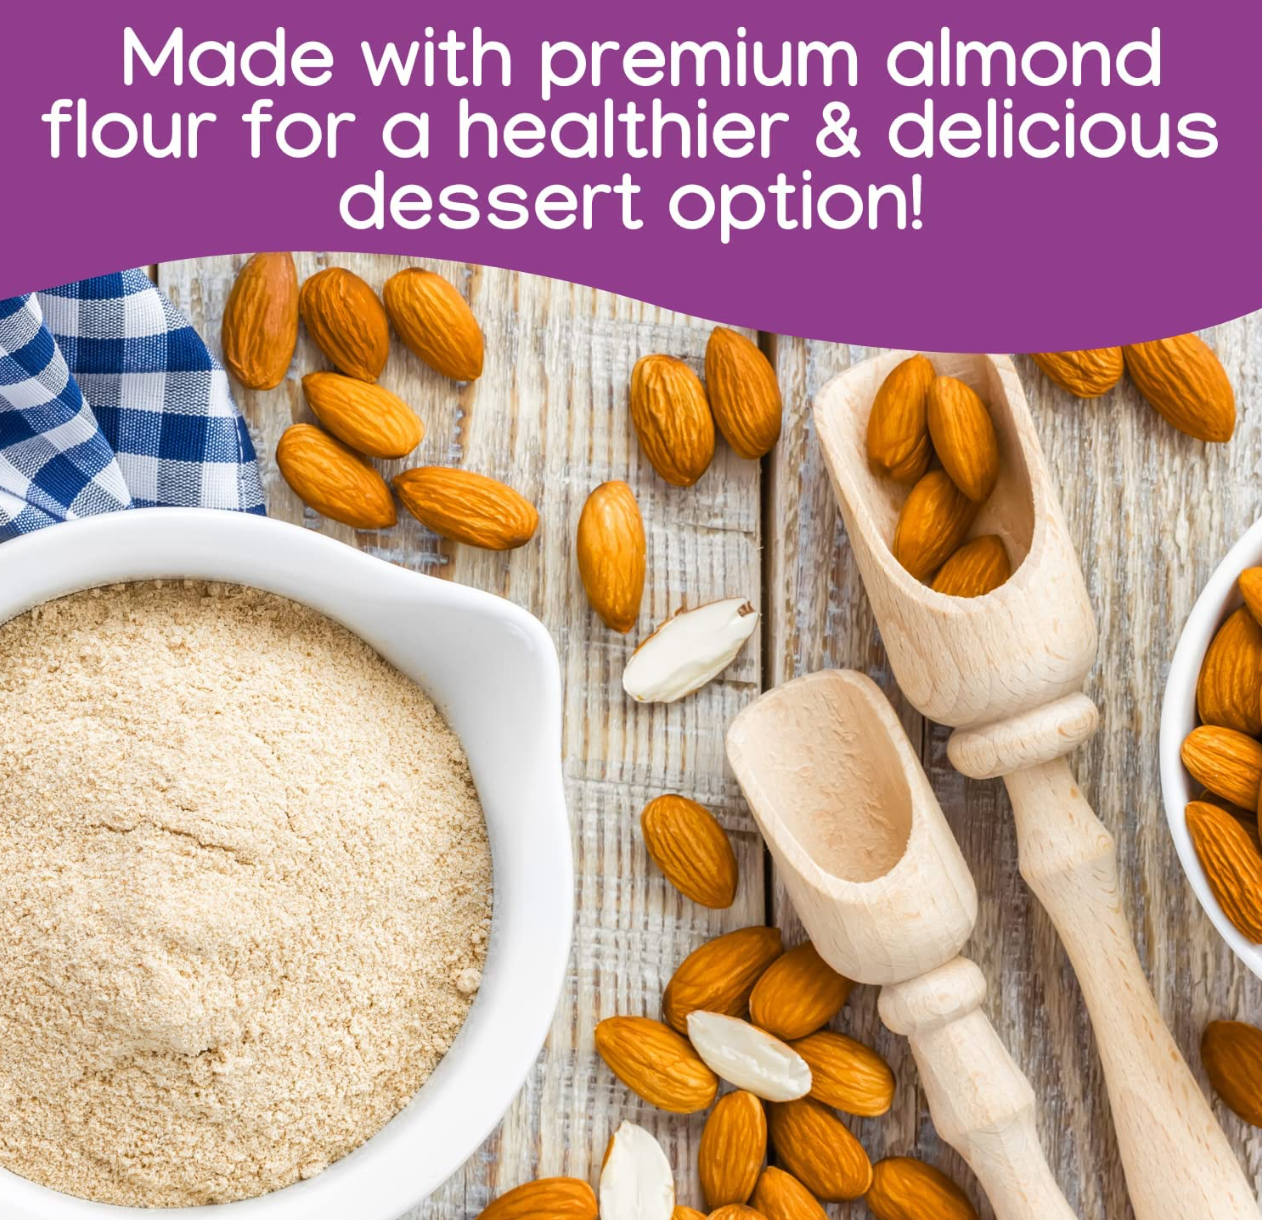 Made with premium almond flour for a healthier & delicious dessert option